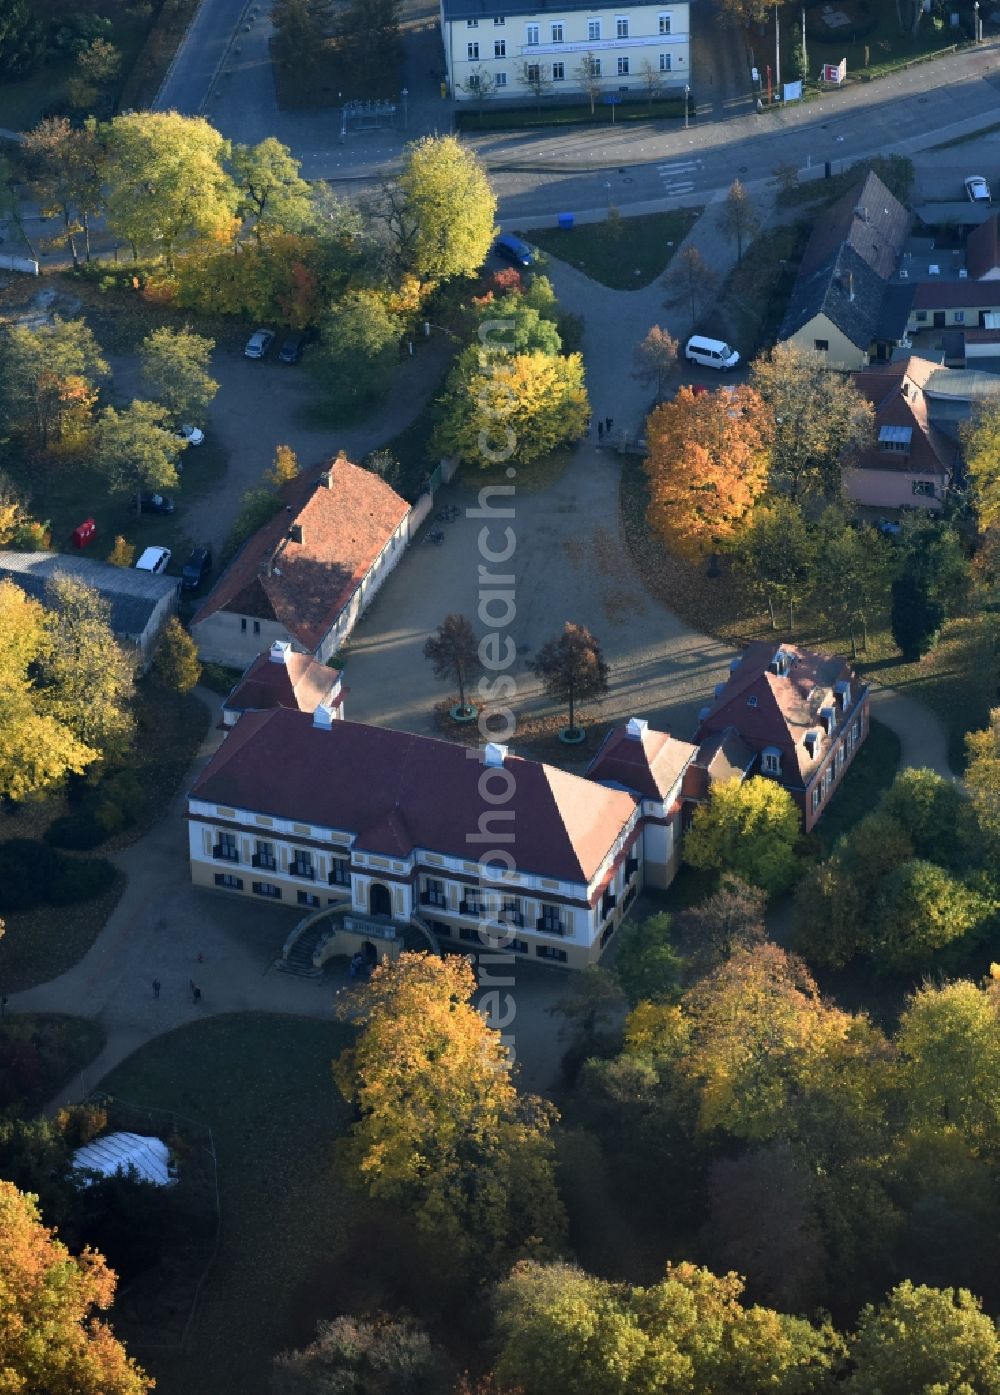 Aerial photograph Caputh - Palace Caputh on Strasse der Einheit in Caputh in the state Brandenburg